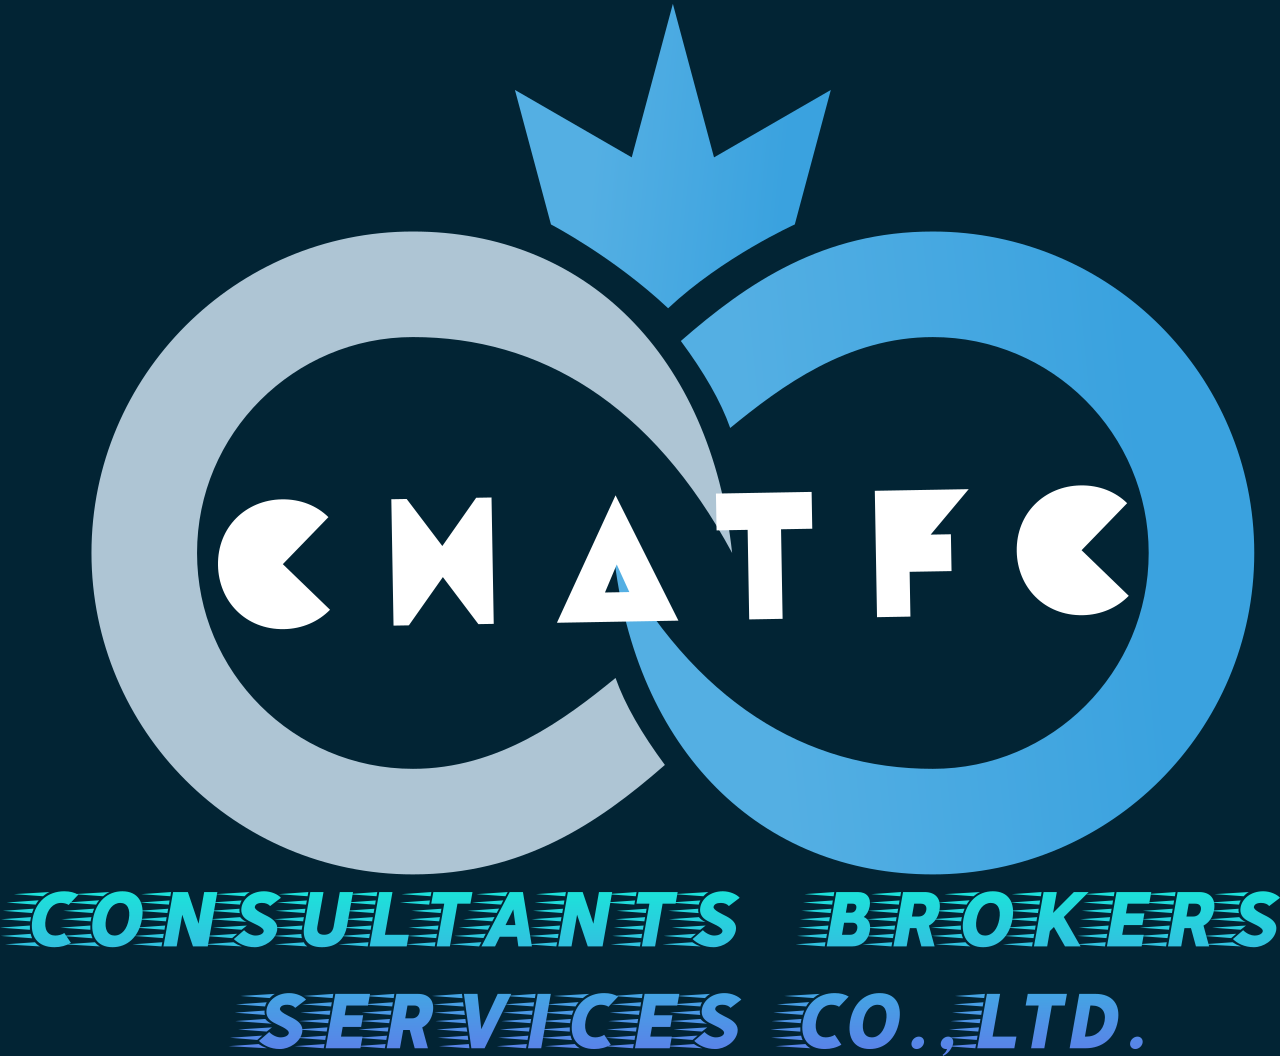 CHATFC​ CONSULTANTS's logo